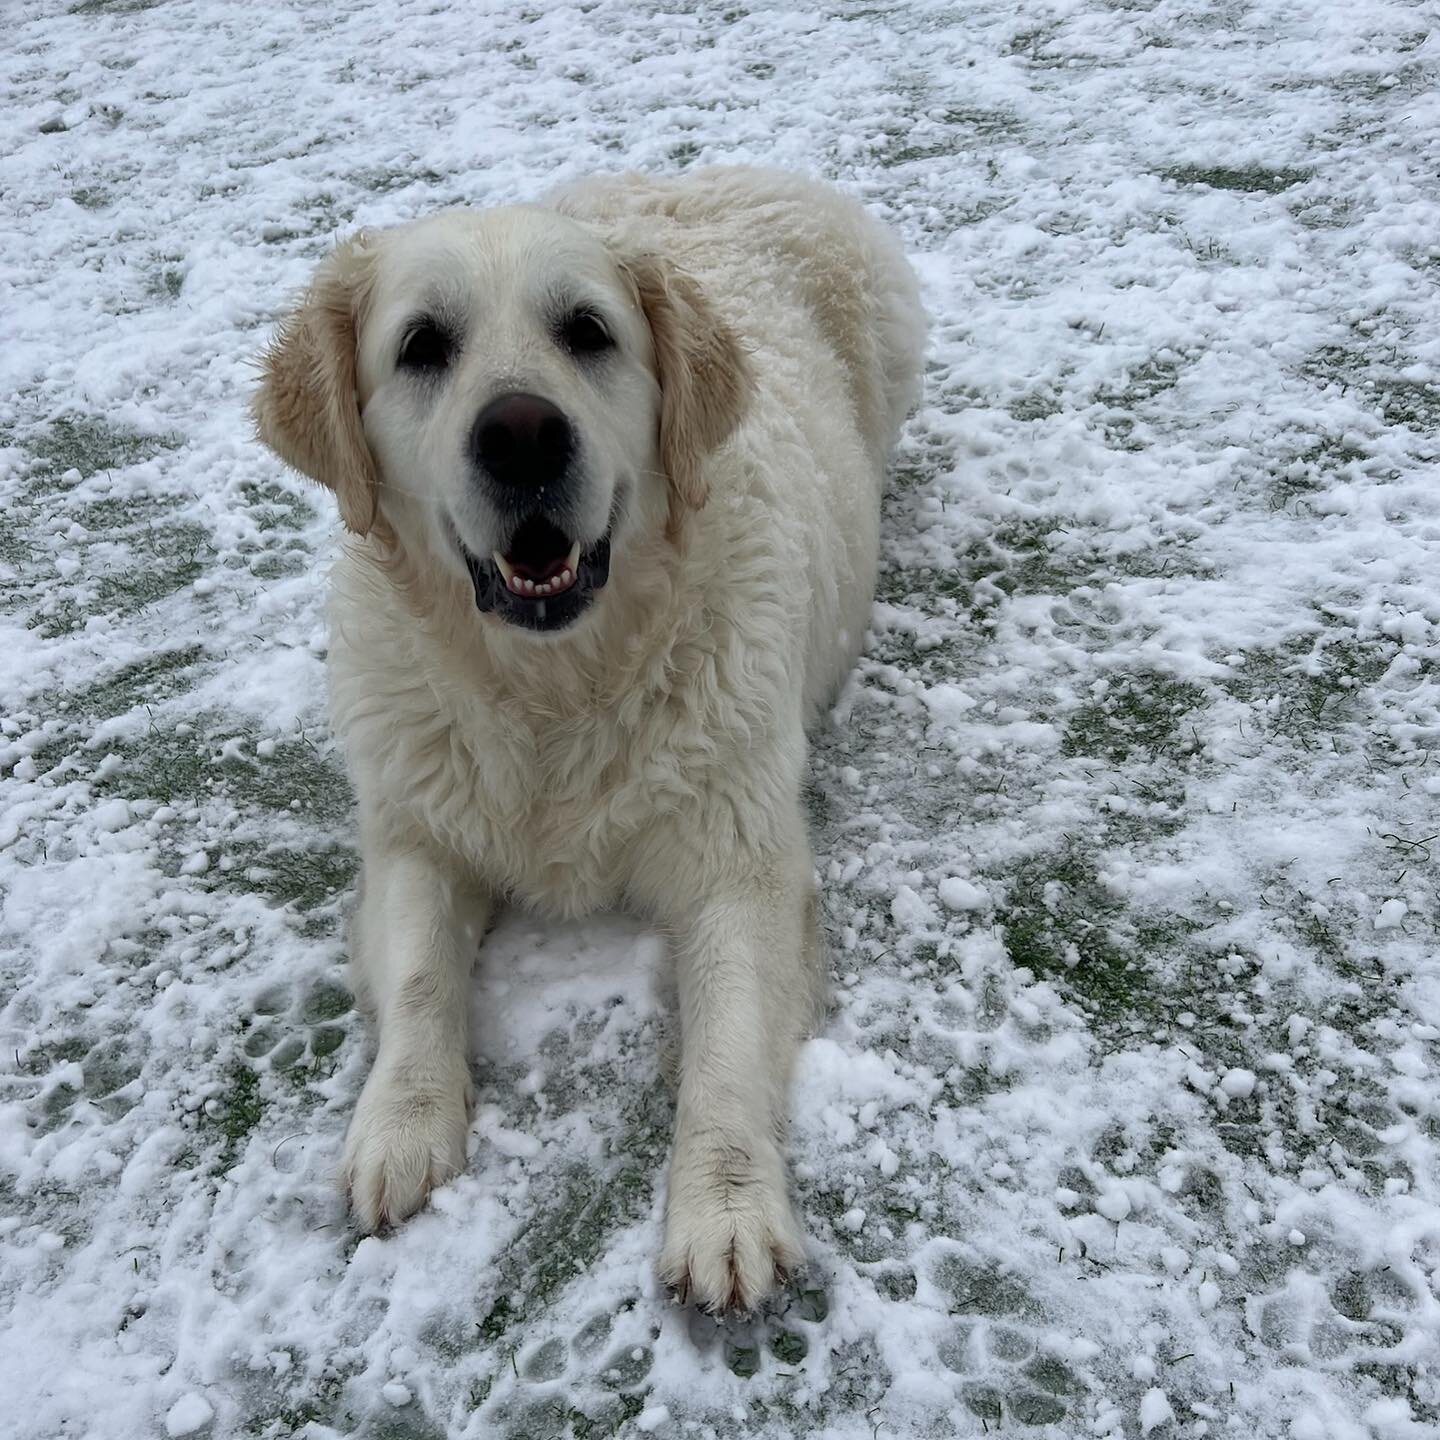 ☯️🐾 Our dogs are SNOW excited to play in the white soft fluffy snow! ❄️⛄️ 
.
.
.
.
.
.
#snowmuchfun #zendogscenter #waunakeewi #rufferee #doggiedaycare #dogsofinstagram #dogsofmadison #dogsofwisconsin #dogsofwaunakee #danecountydogs #zendogs #zenzon